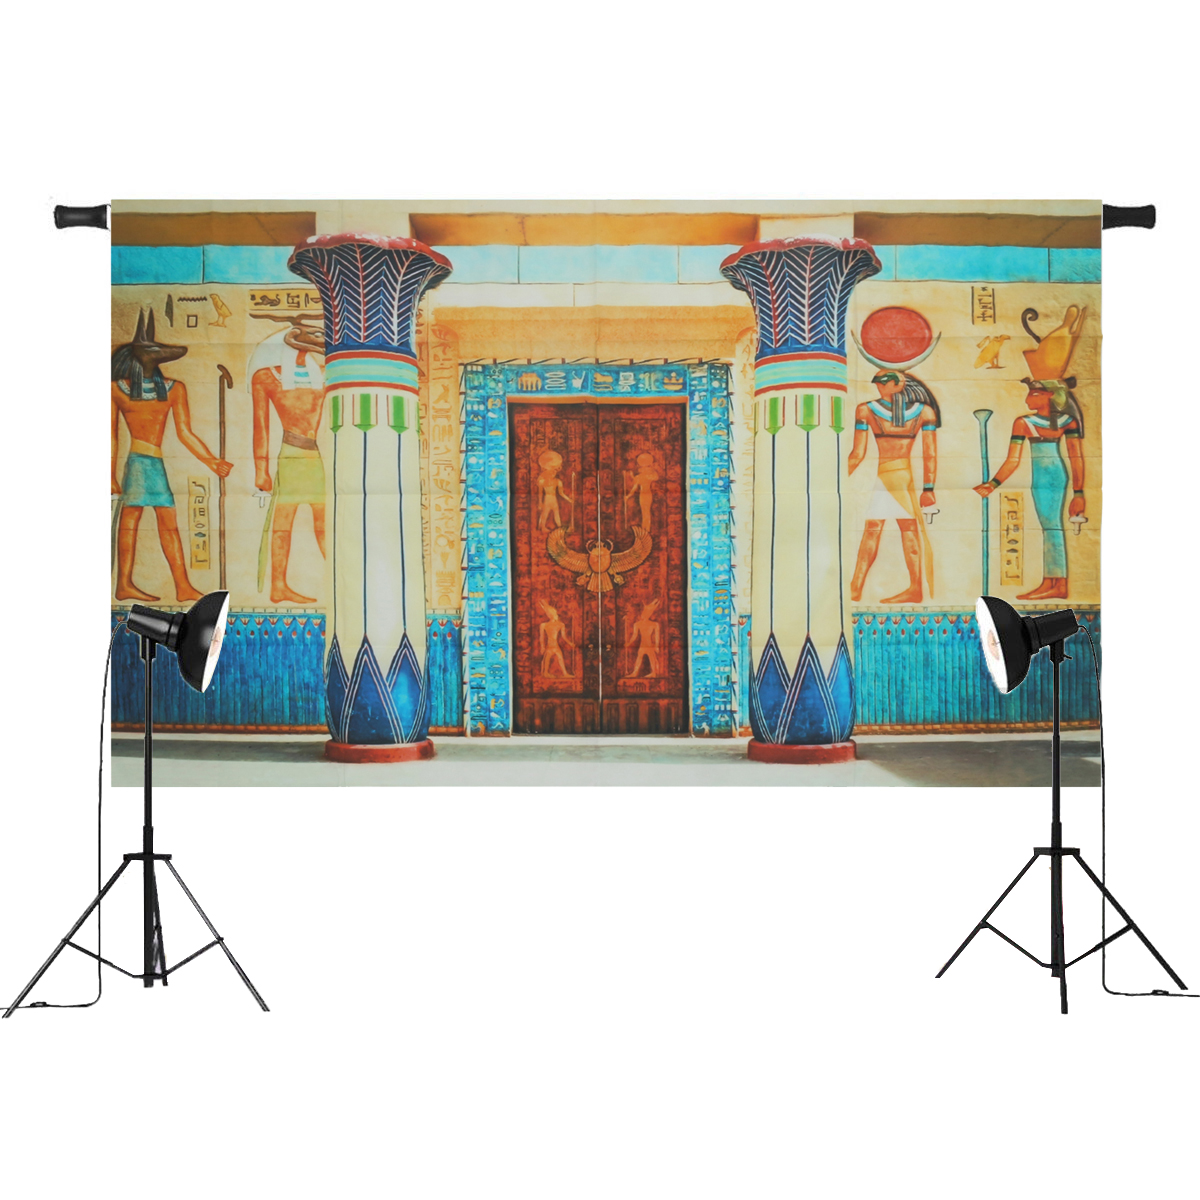 

5x3FT 7x5FT Egyptian Frescoes Wall Photography Backdrop Studio Prop Background